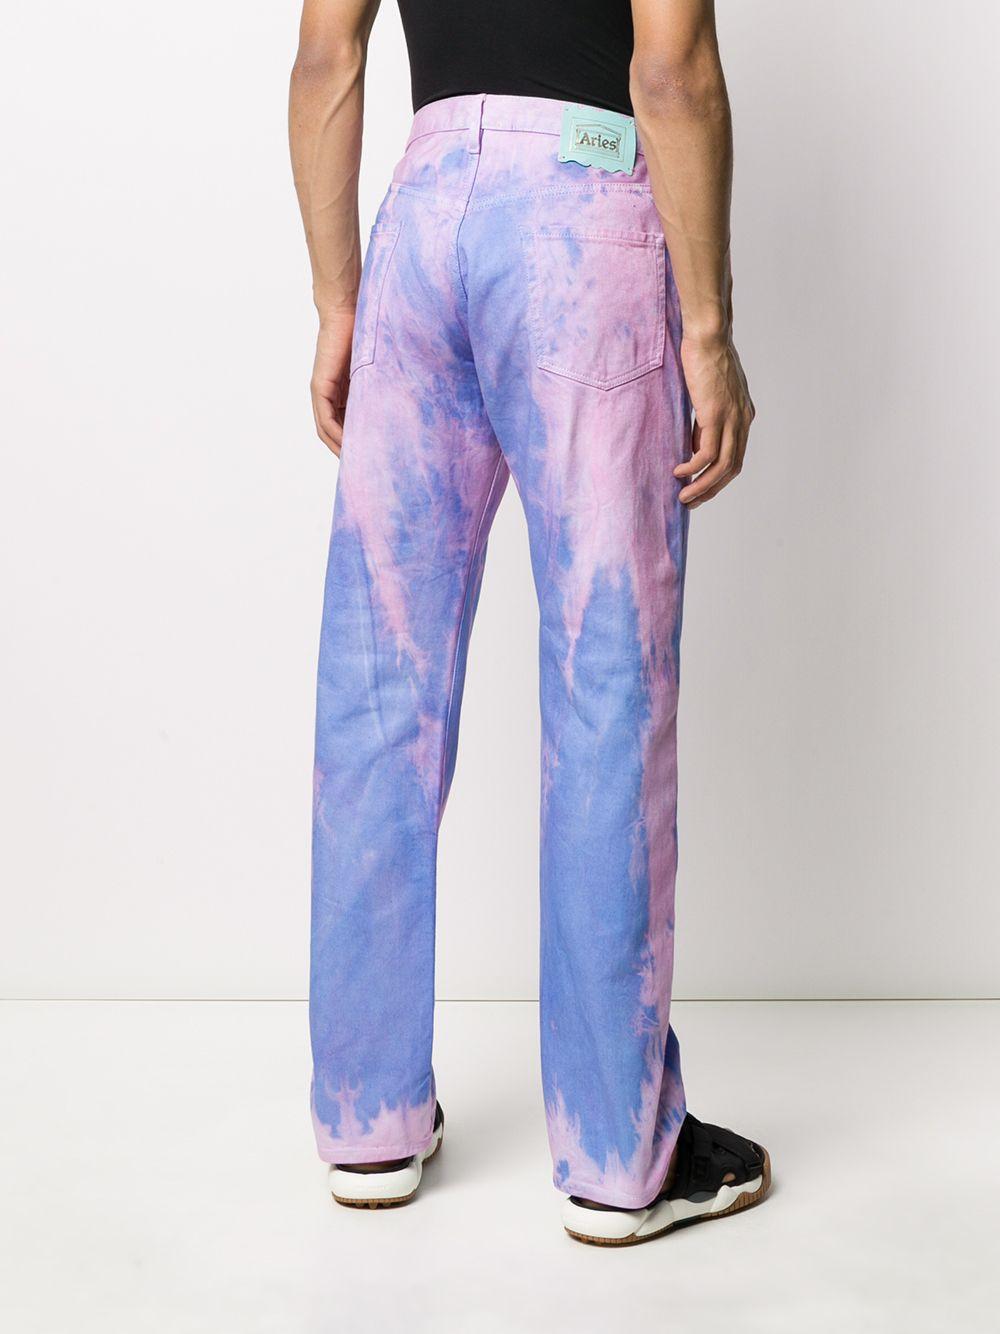 Aries Denim Tie-dye Print Straight-leg Jeans in Pink for Men - Lyst